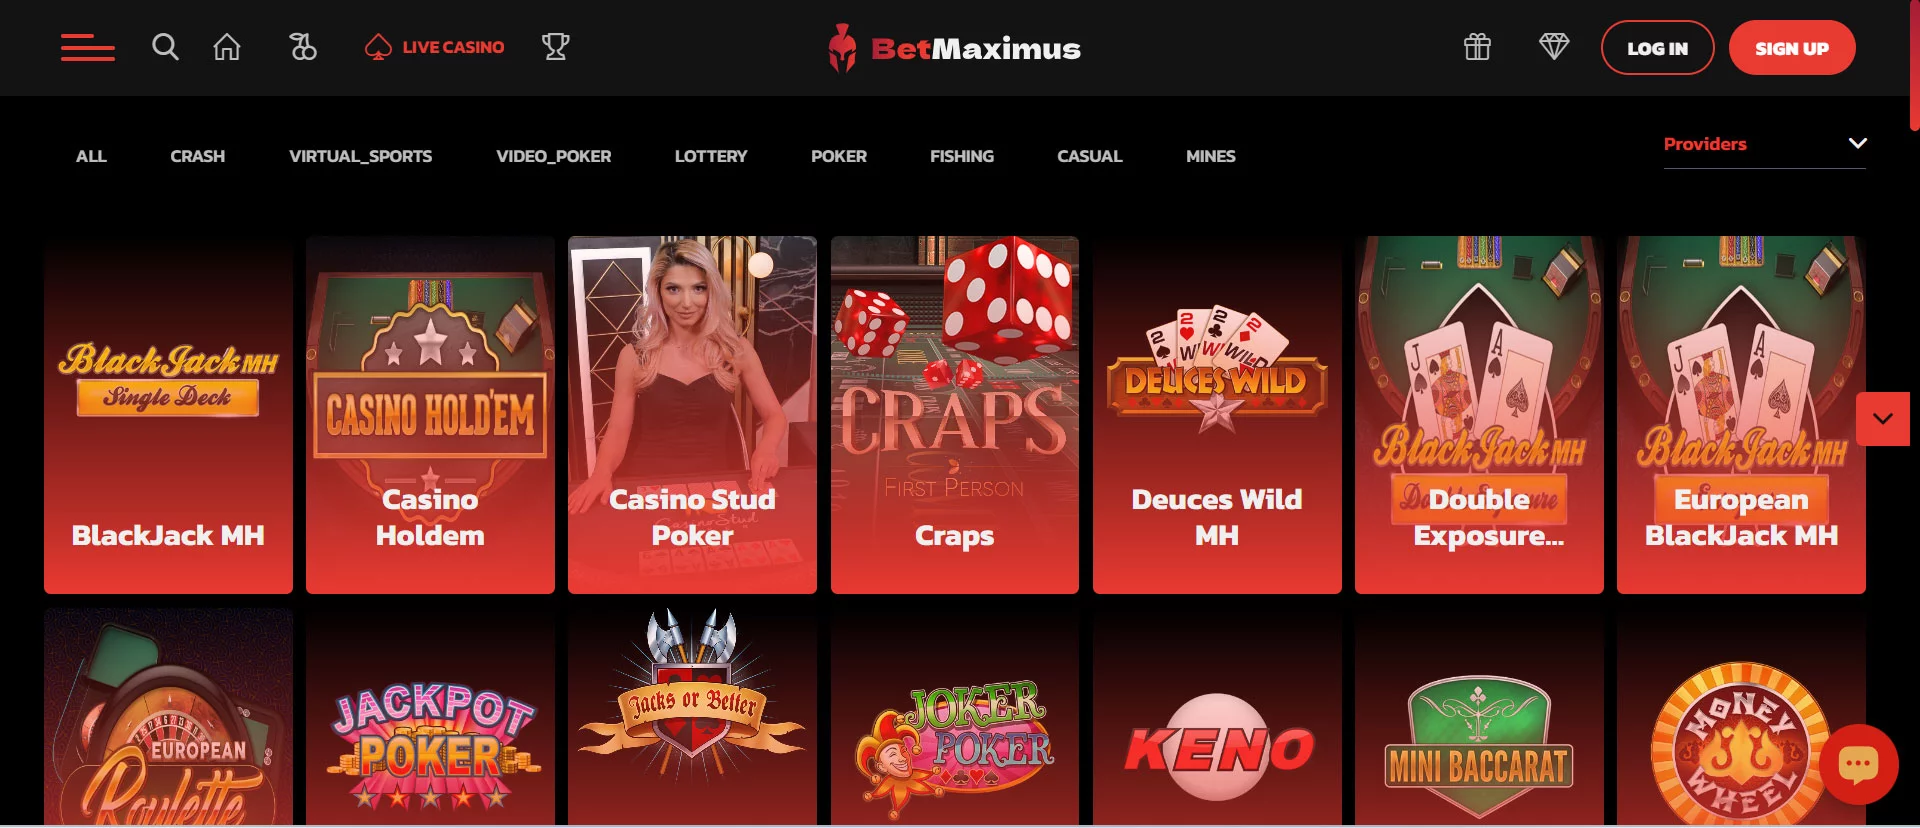 BetMaximus Casino Live Casino Games